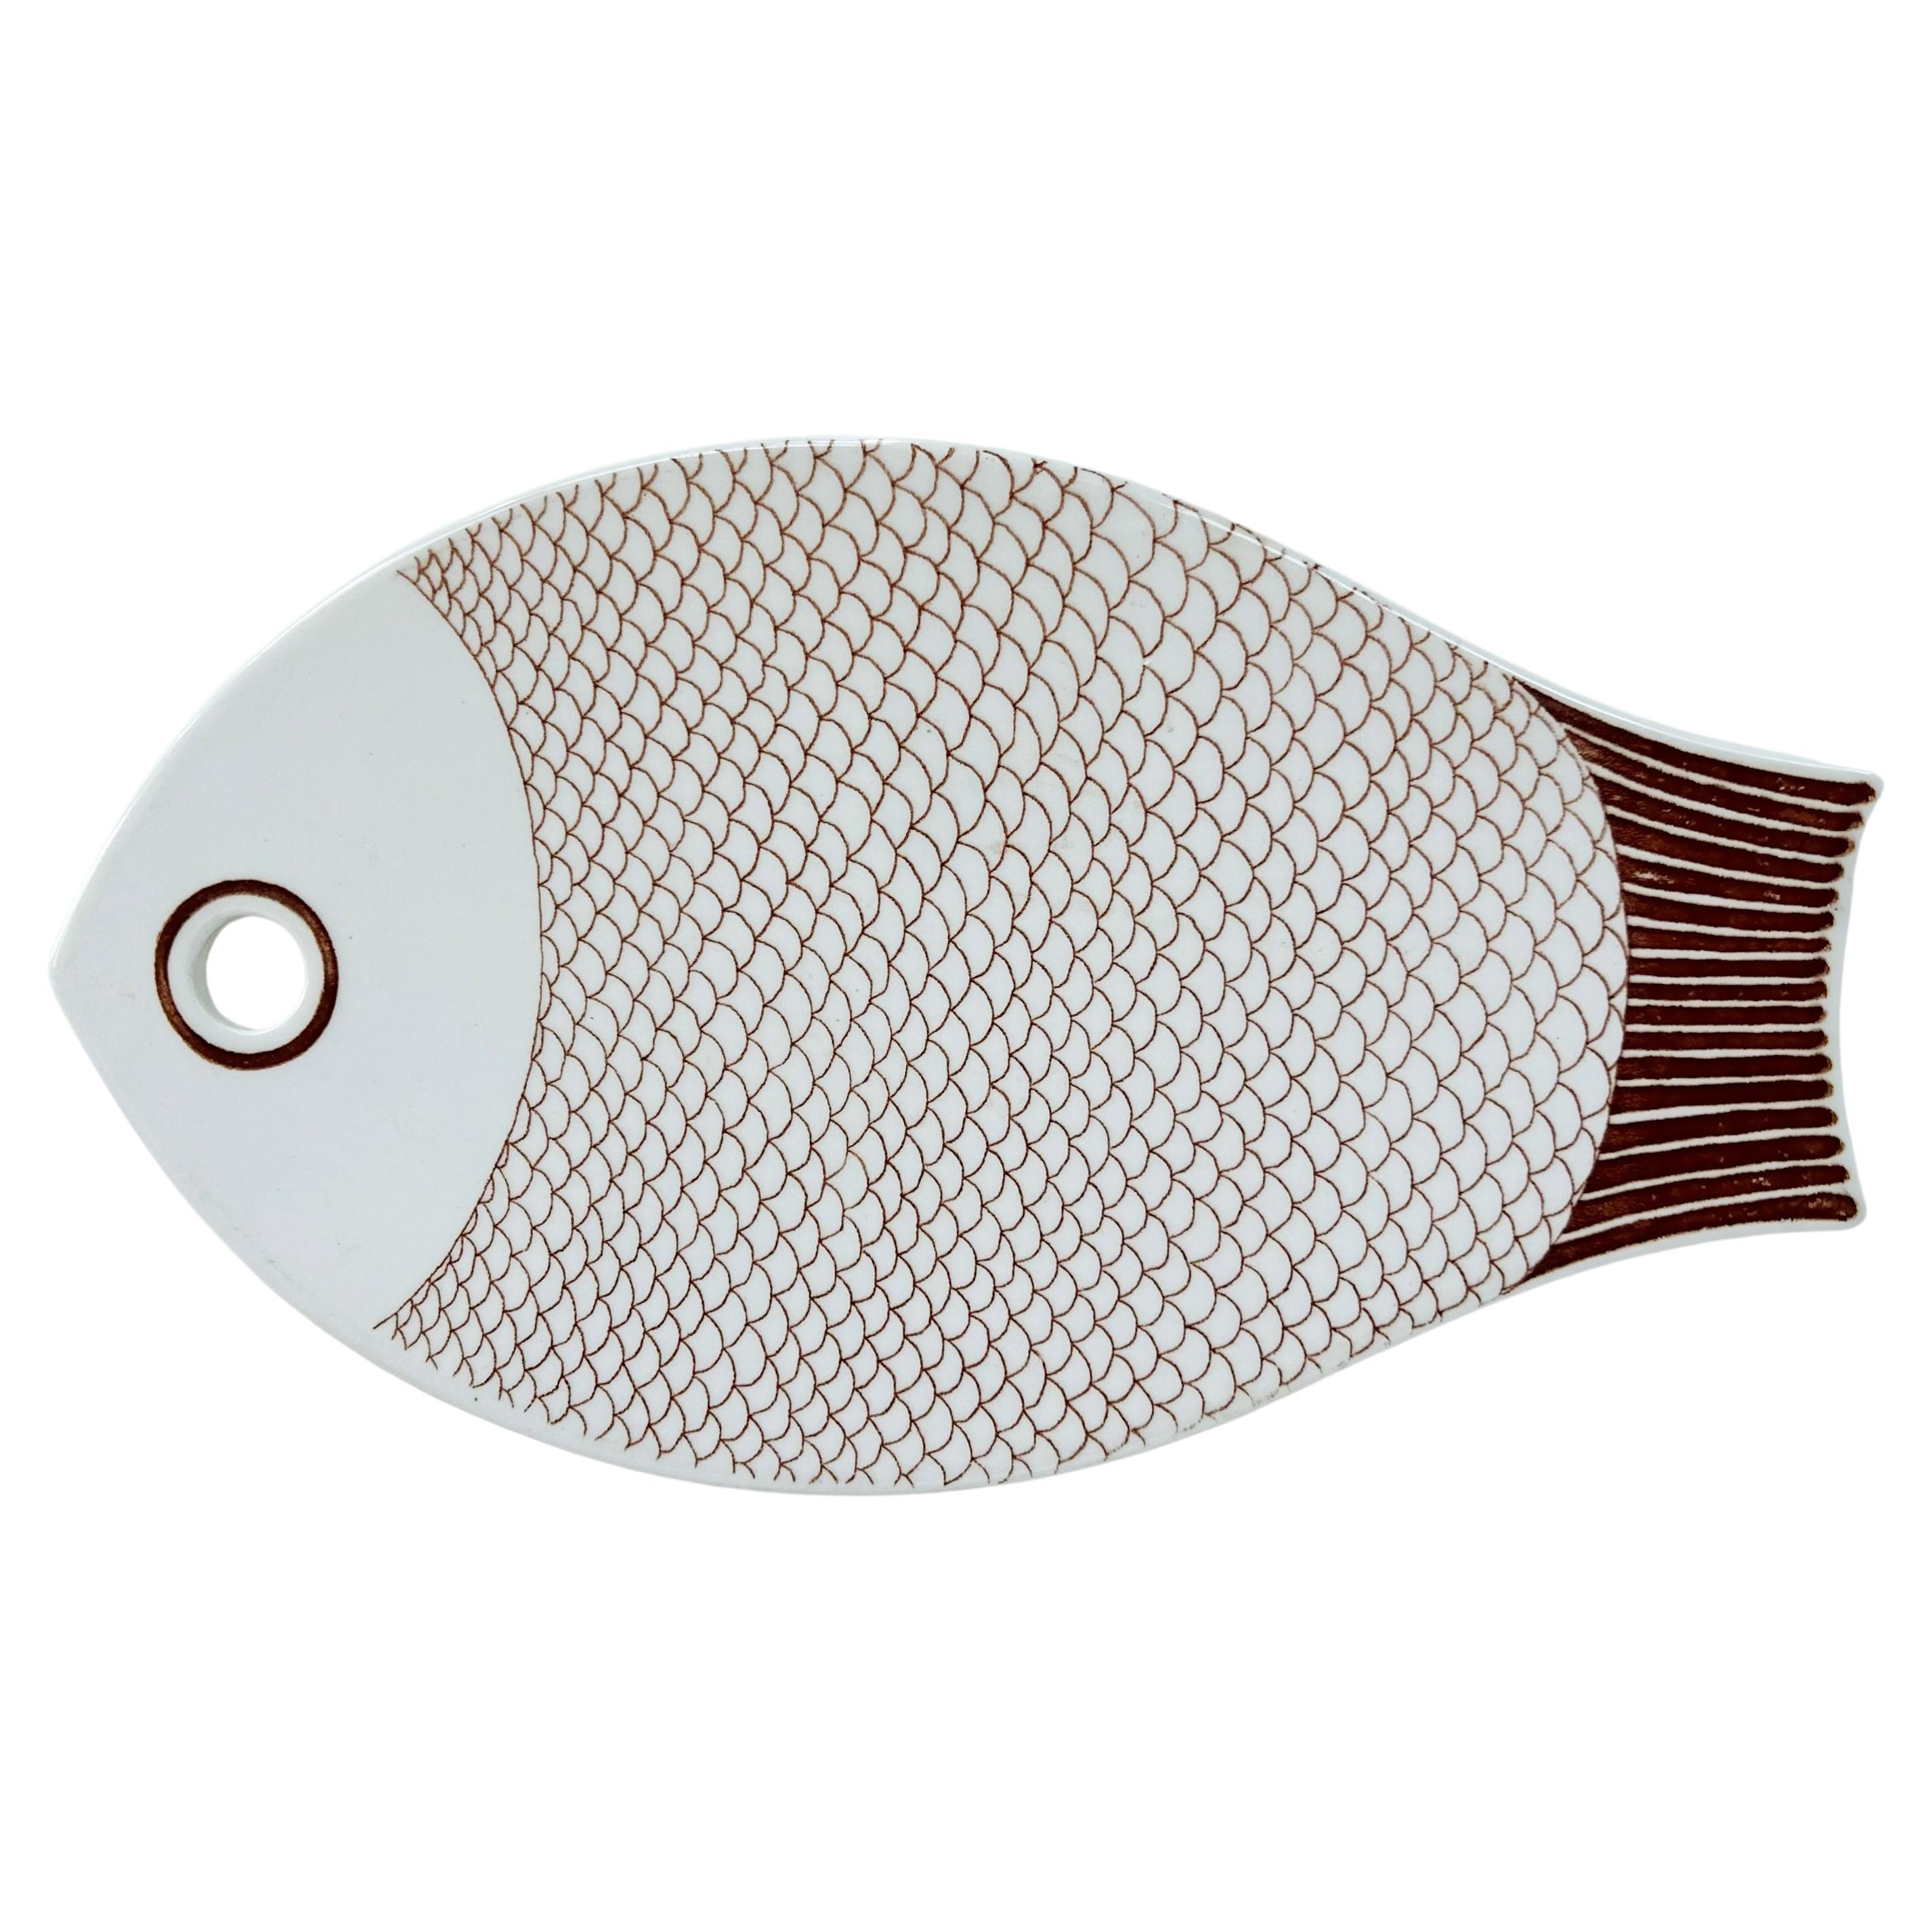 Vintage Ceramic Fish Serving Platter, Danish Modern Style